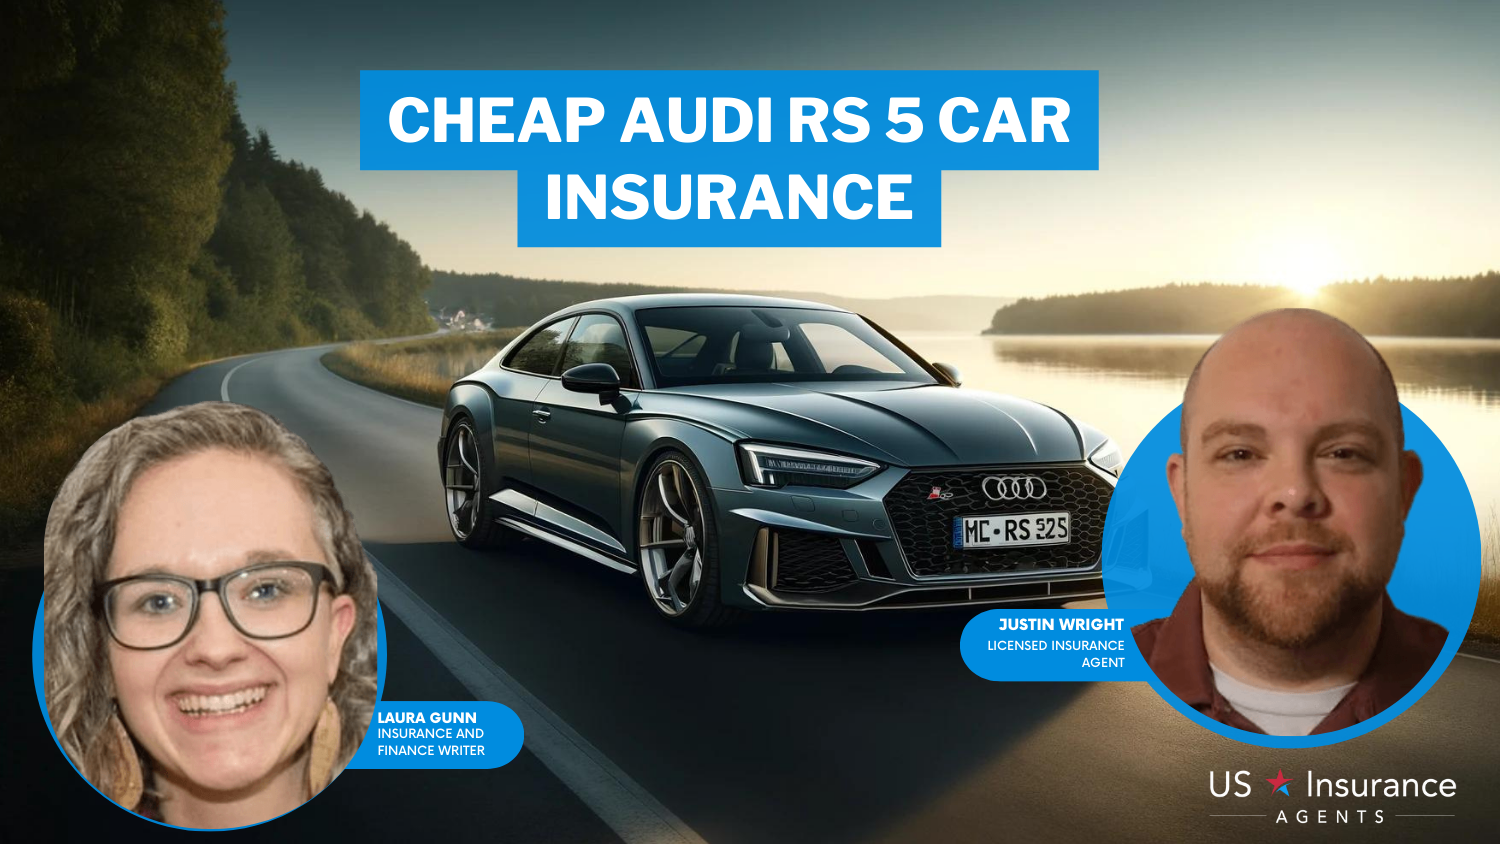 Cheap Audi RS 5 Car Insurance: Allstate, State Farm, and Progressive